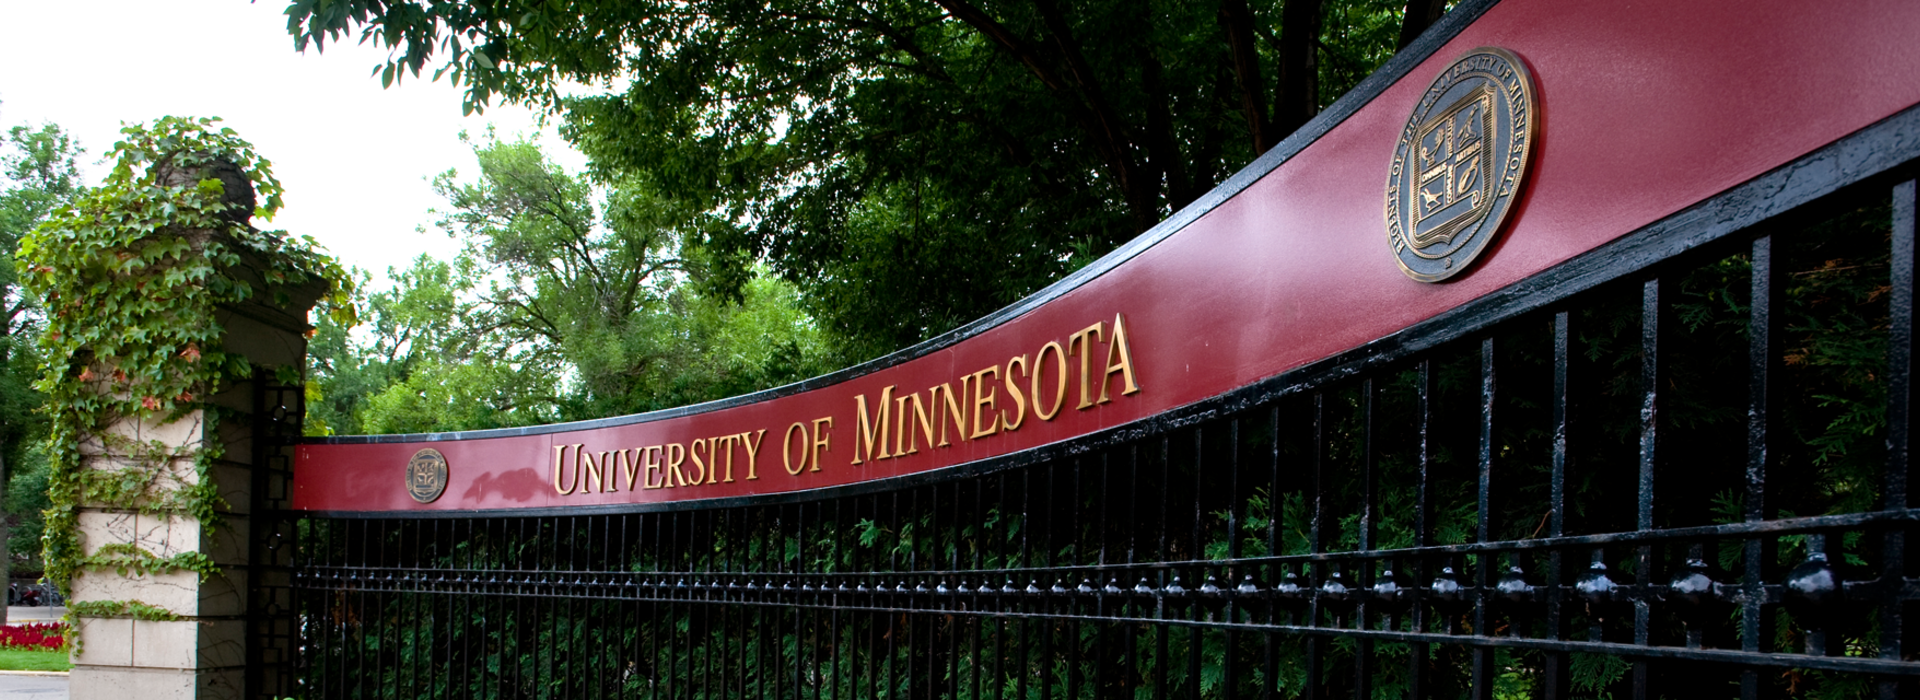 Image of iron gate "University of Minnesota"